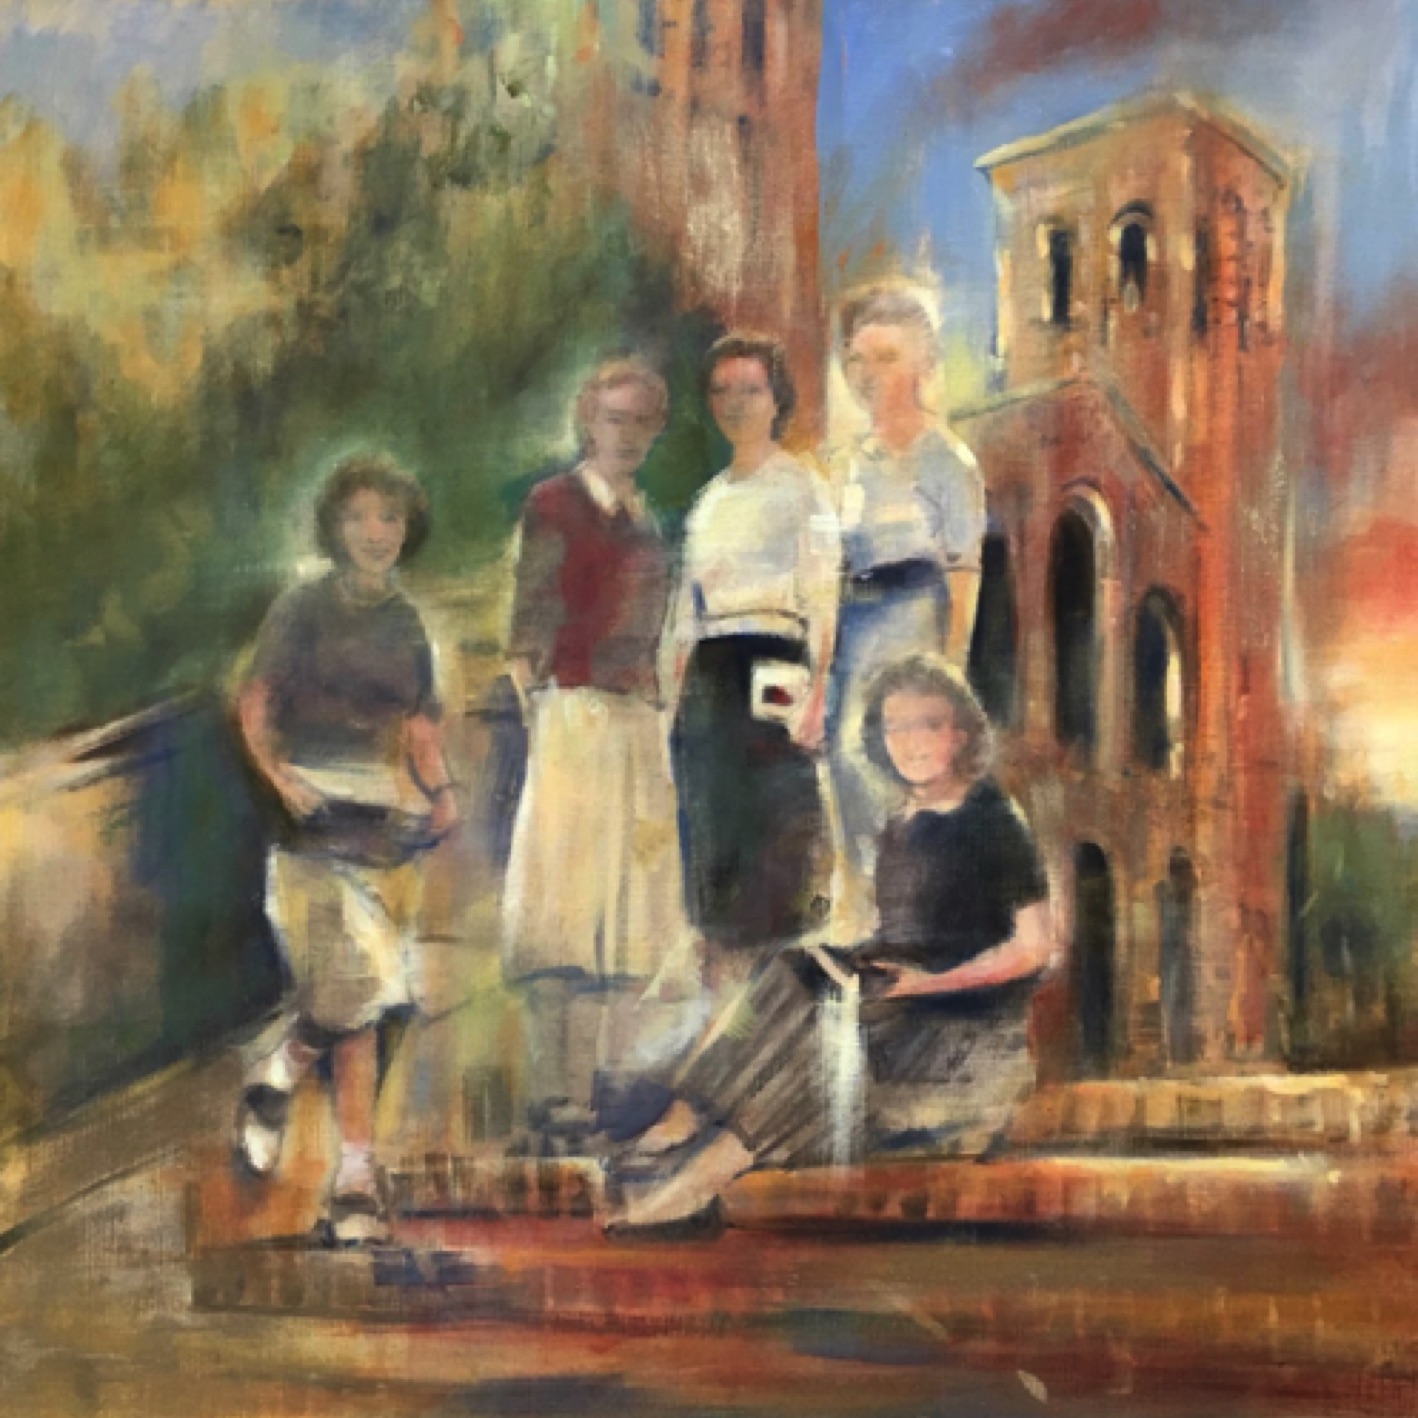 Gregg Chadwick
UCLA Beginnings 1950s
30”x30” oil on linen 2019
UCLA School of Nursing Collection